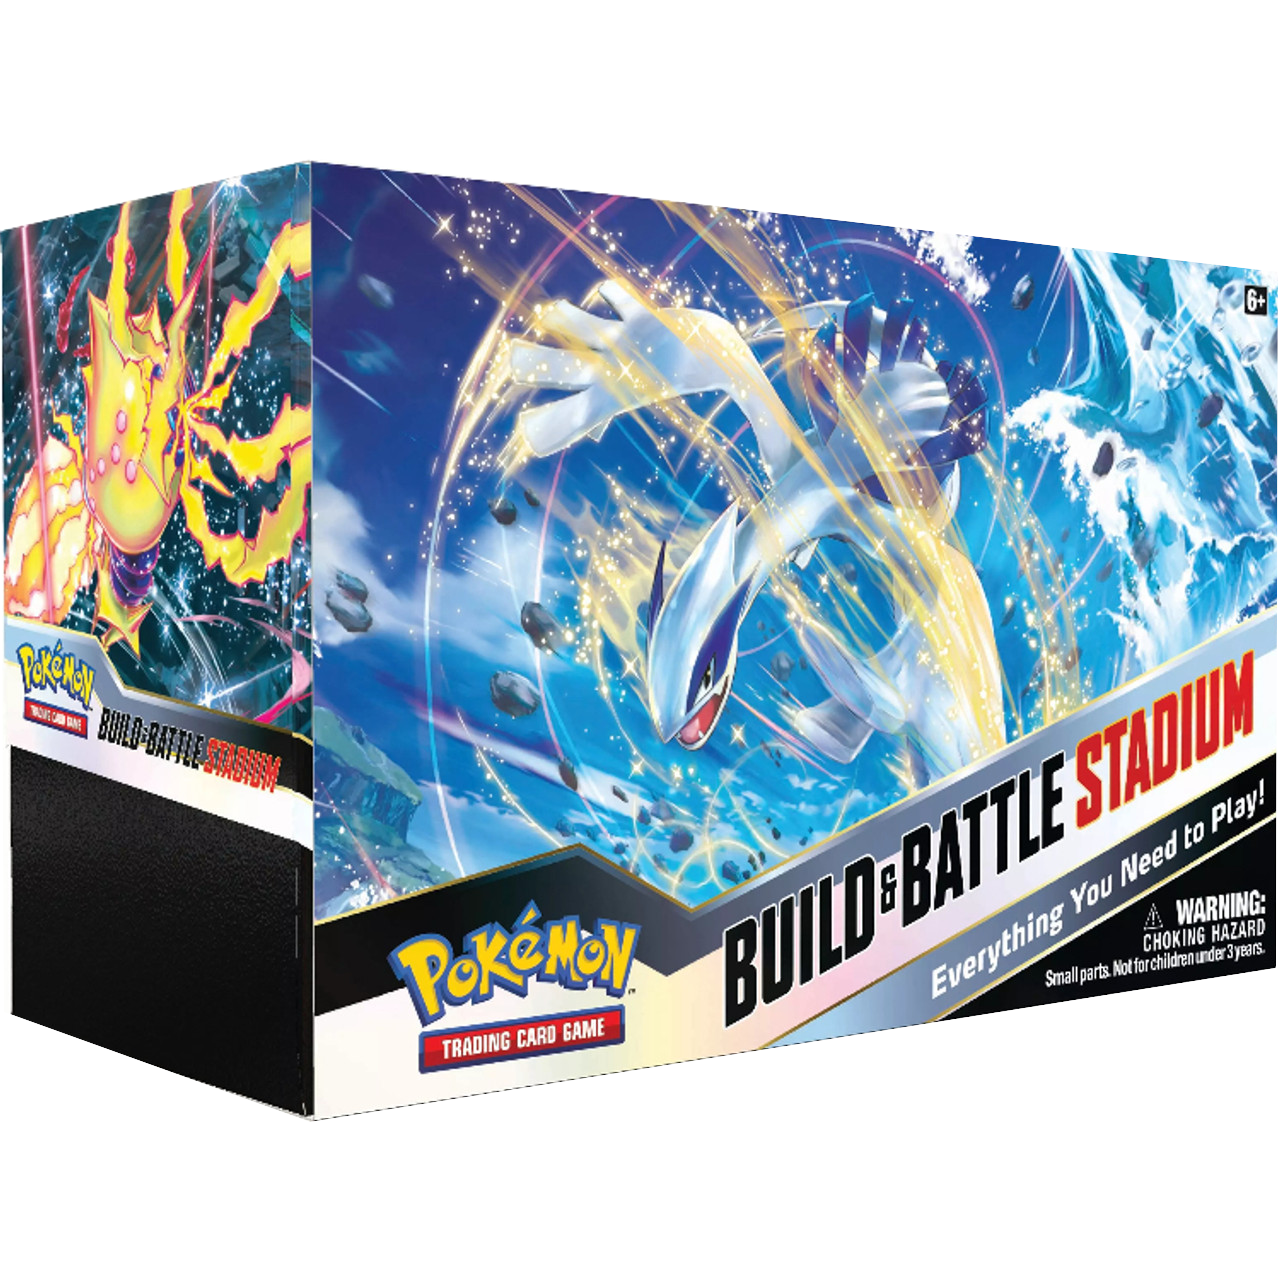 Pokémon - Sword & Shield - Silver Tempest - Build & Battle Stadium